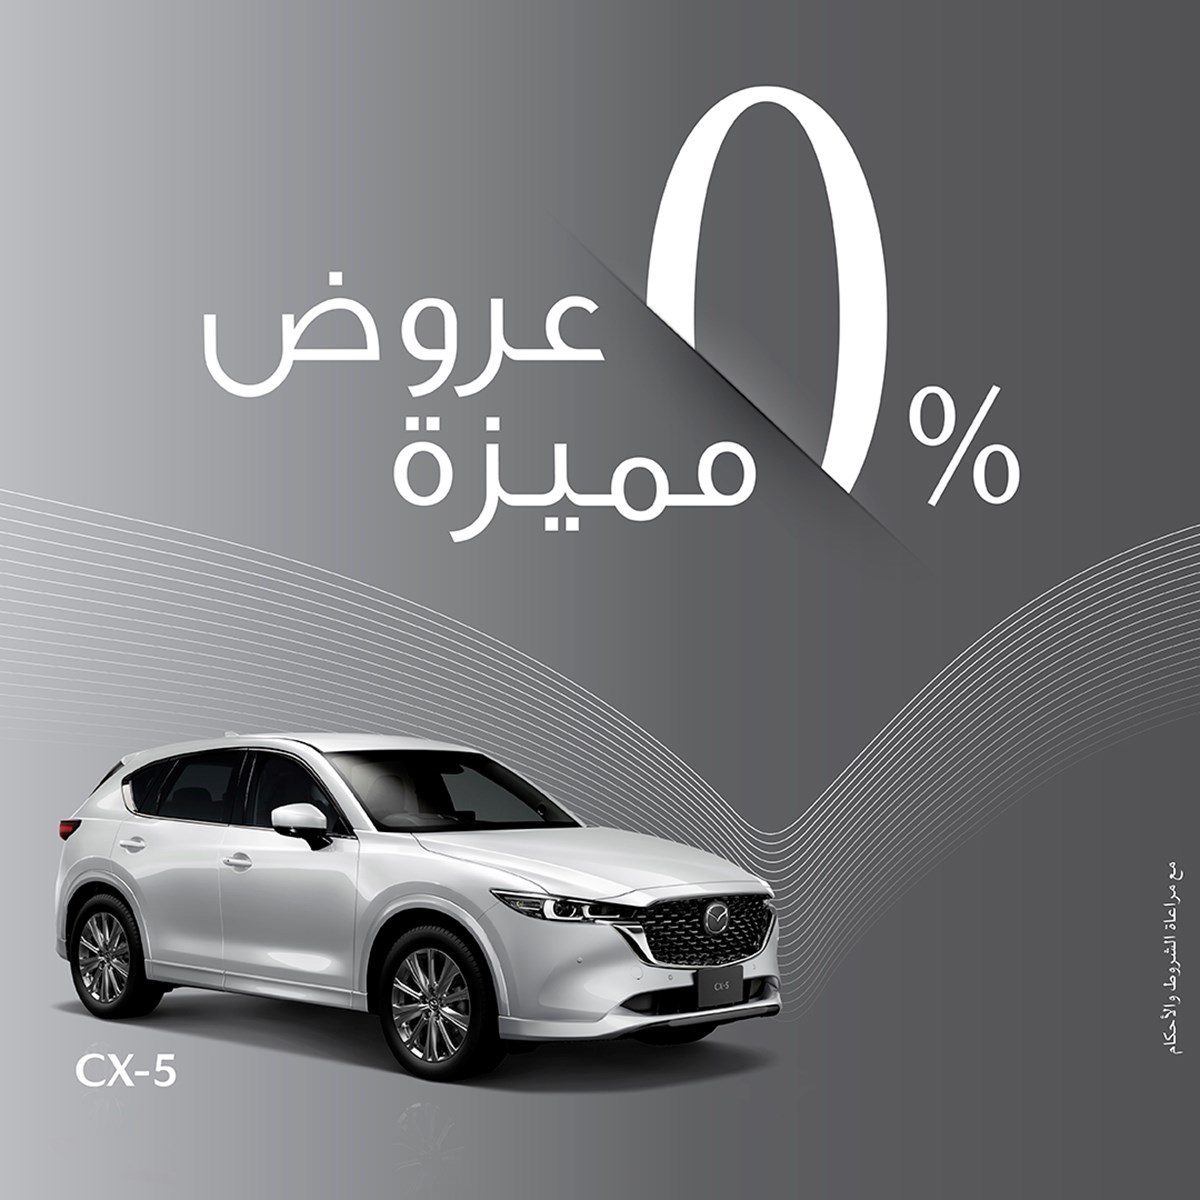 Mazda CX-5 0% Interest Special Offer